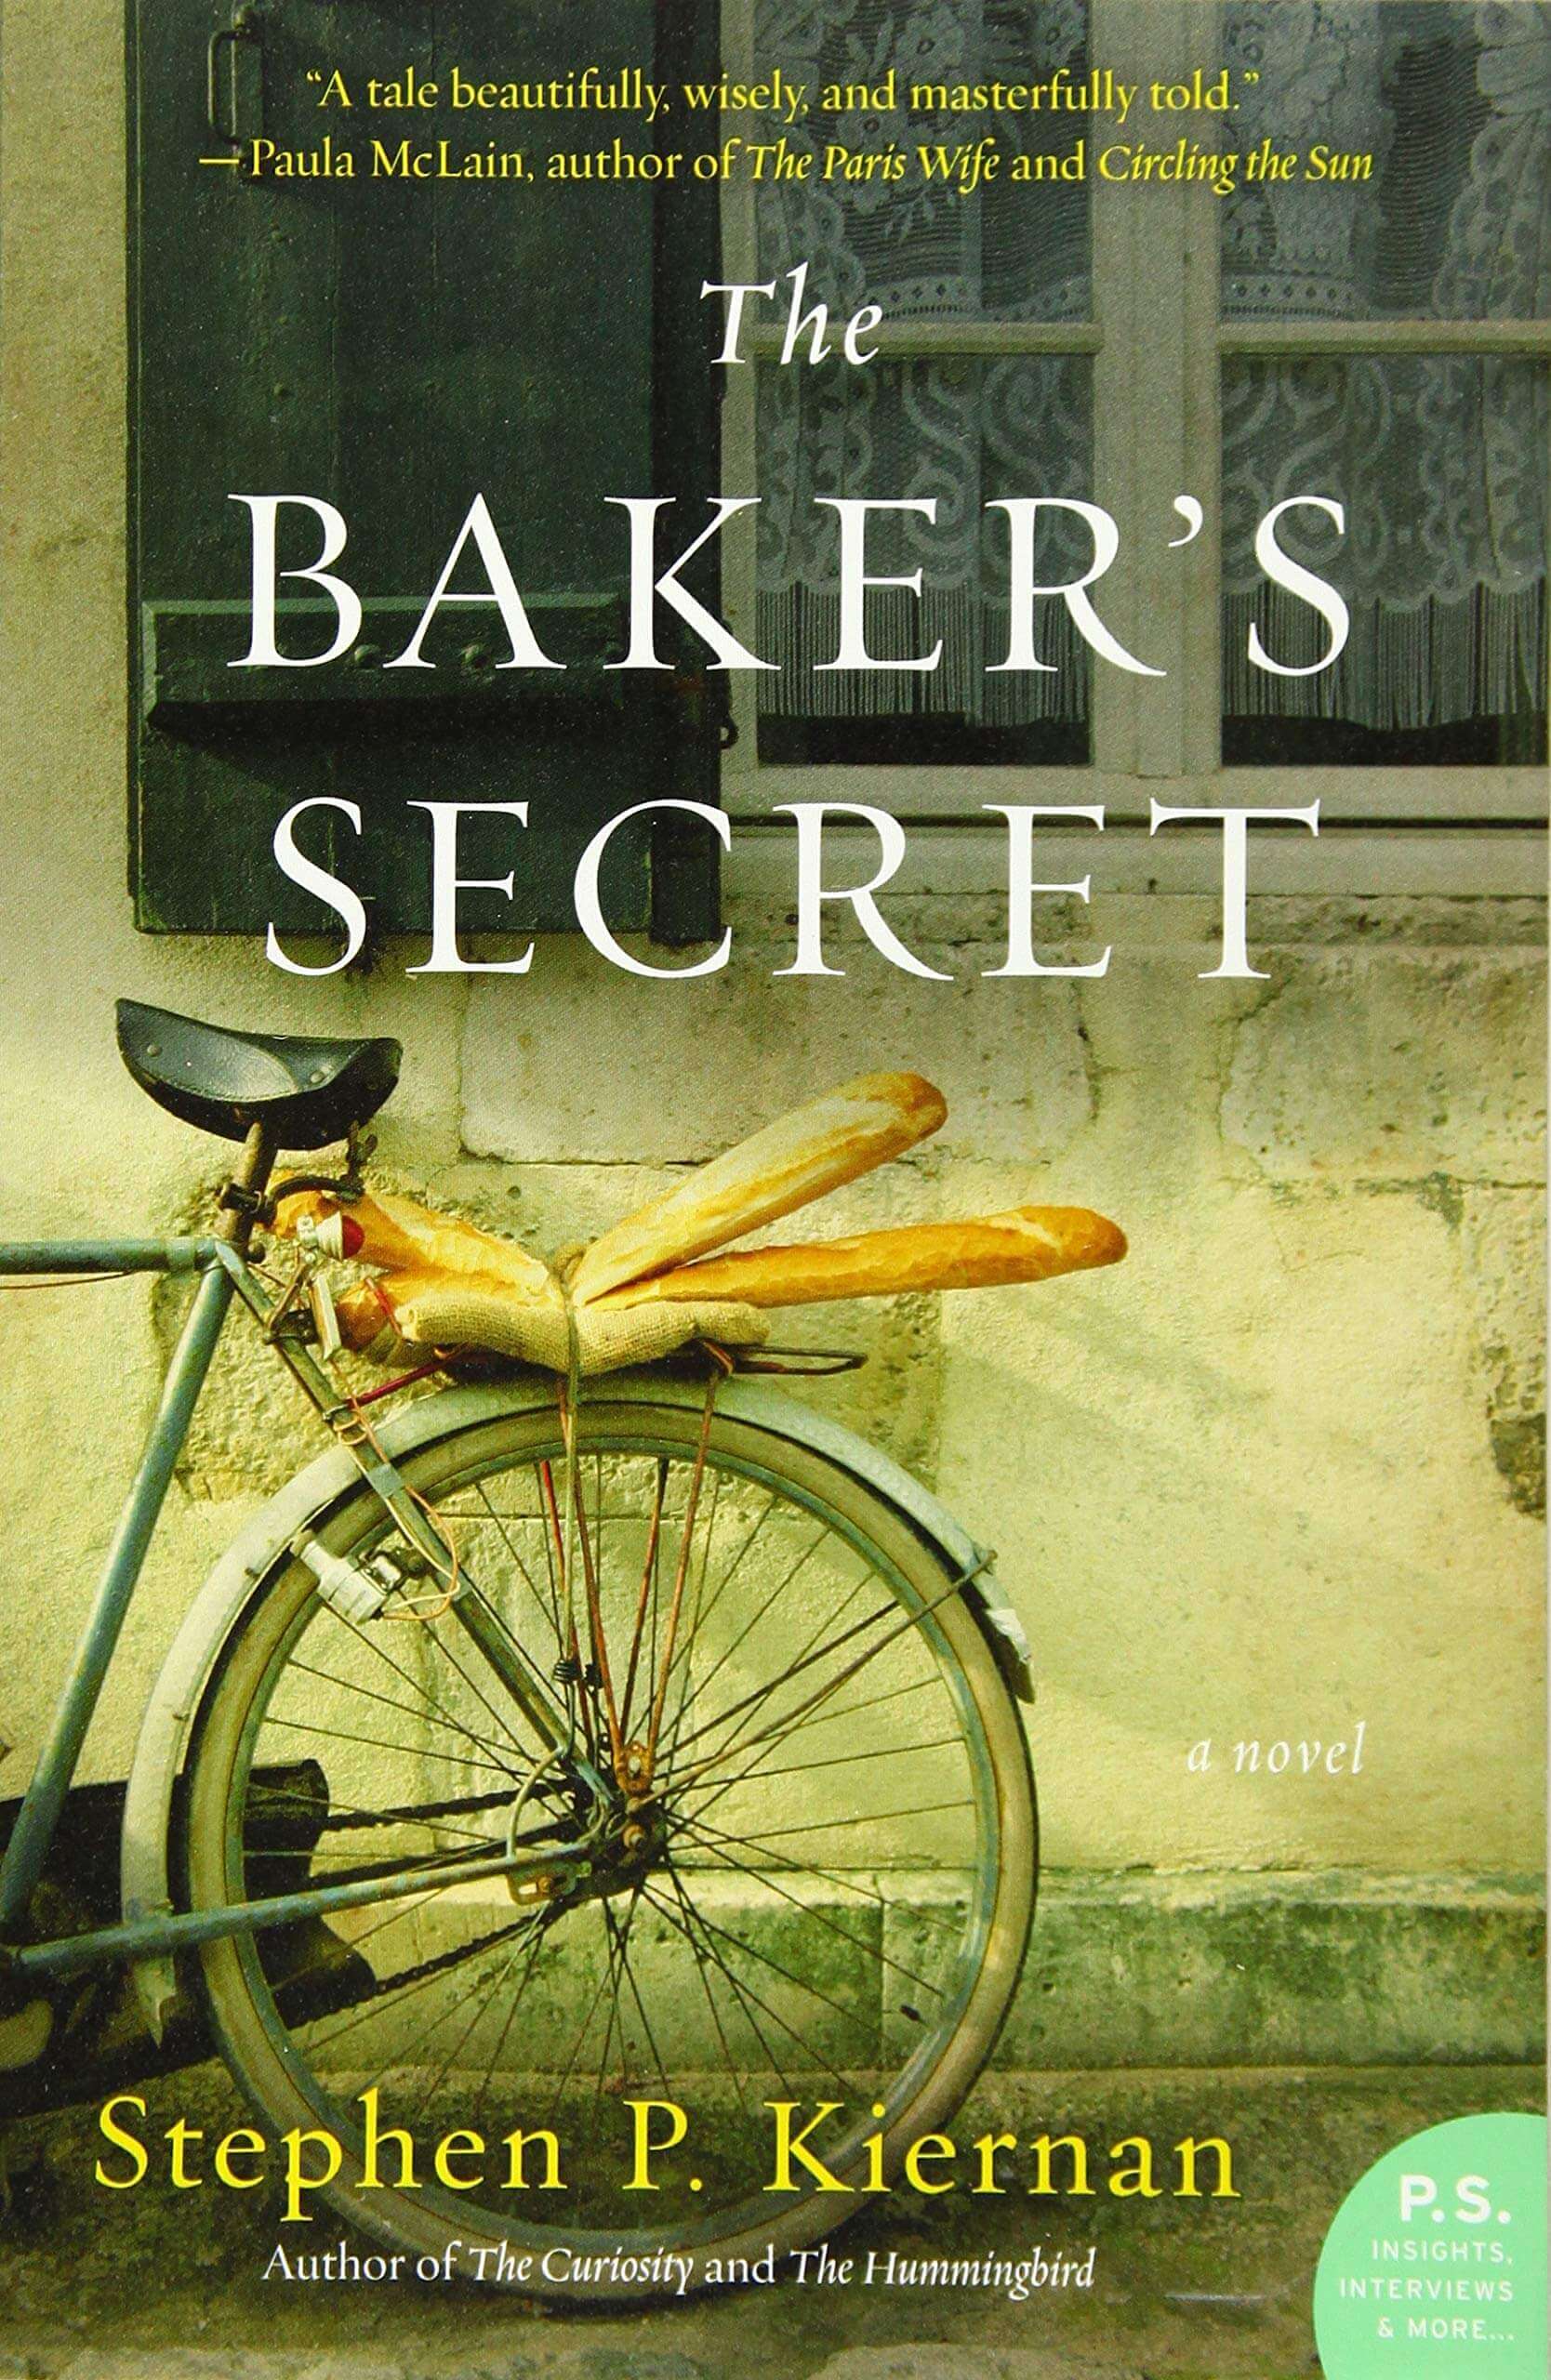 Cover of The Baker's Secret by Stephen P. Kiernan